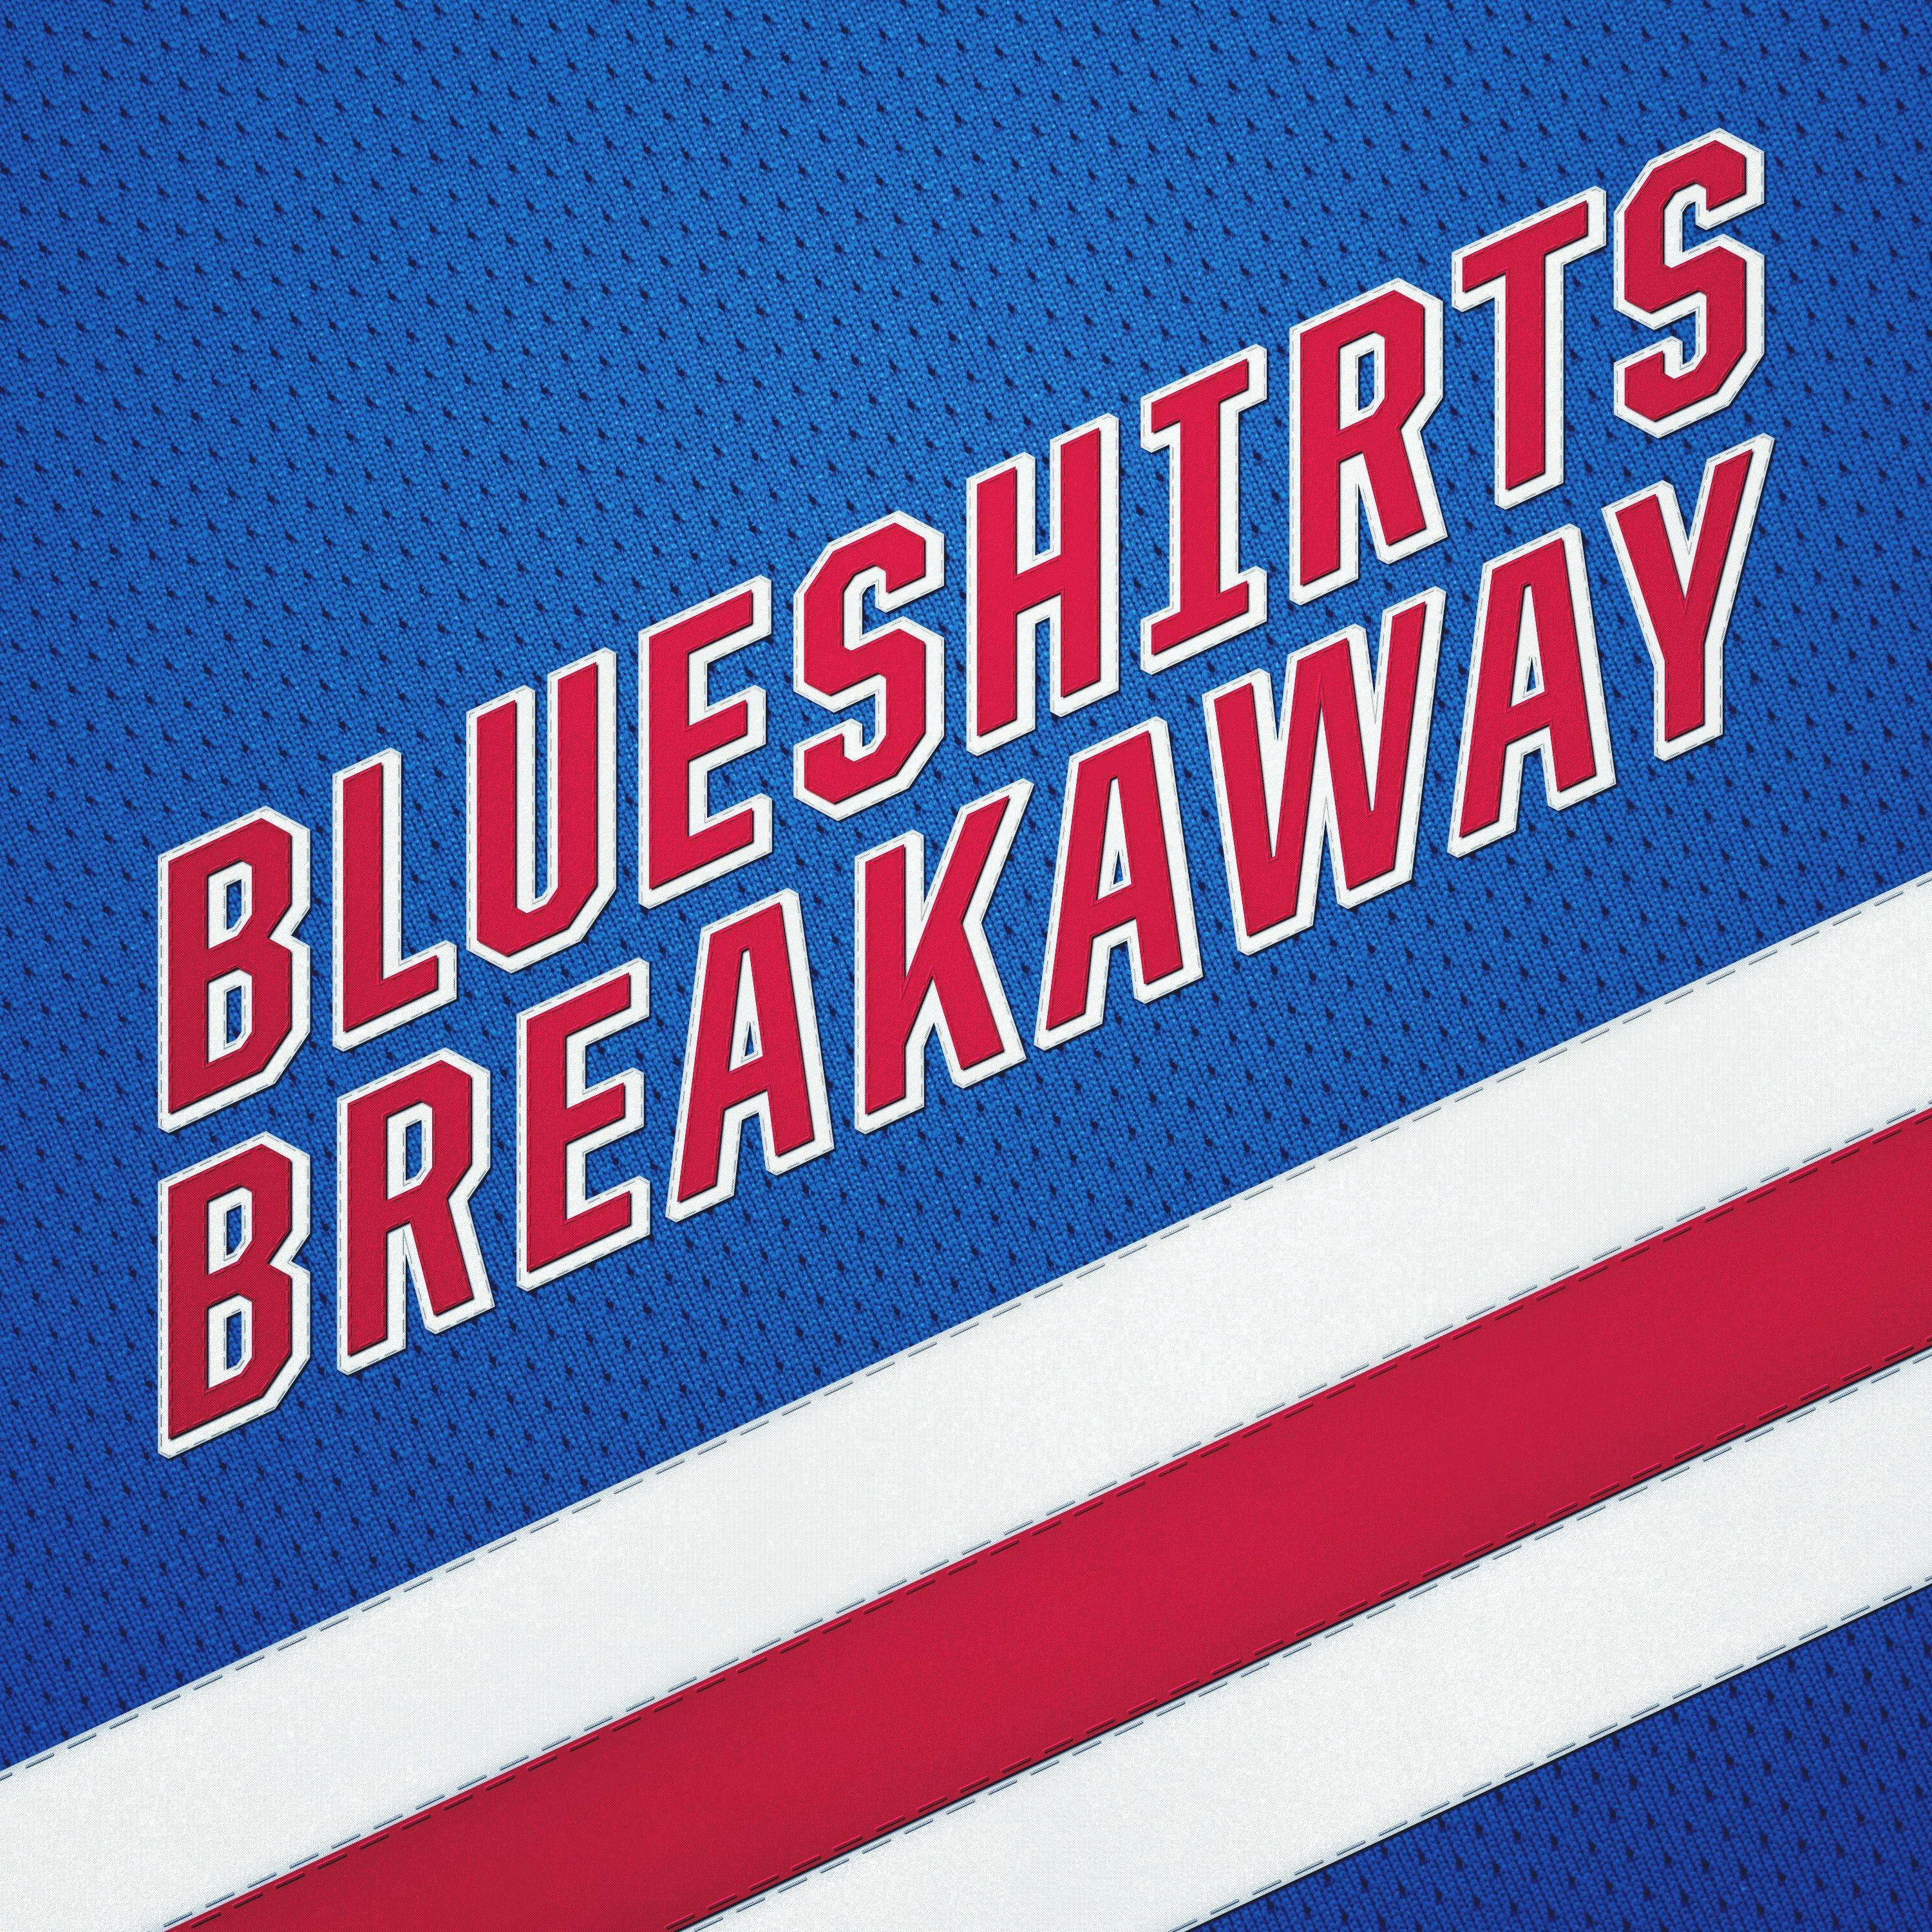 Blueshirts Breakaway EP 96 - Special Preseason Viewer Mailbag!